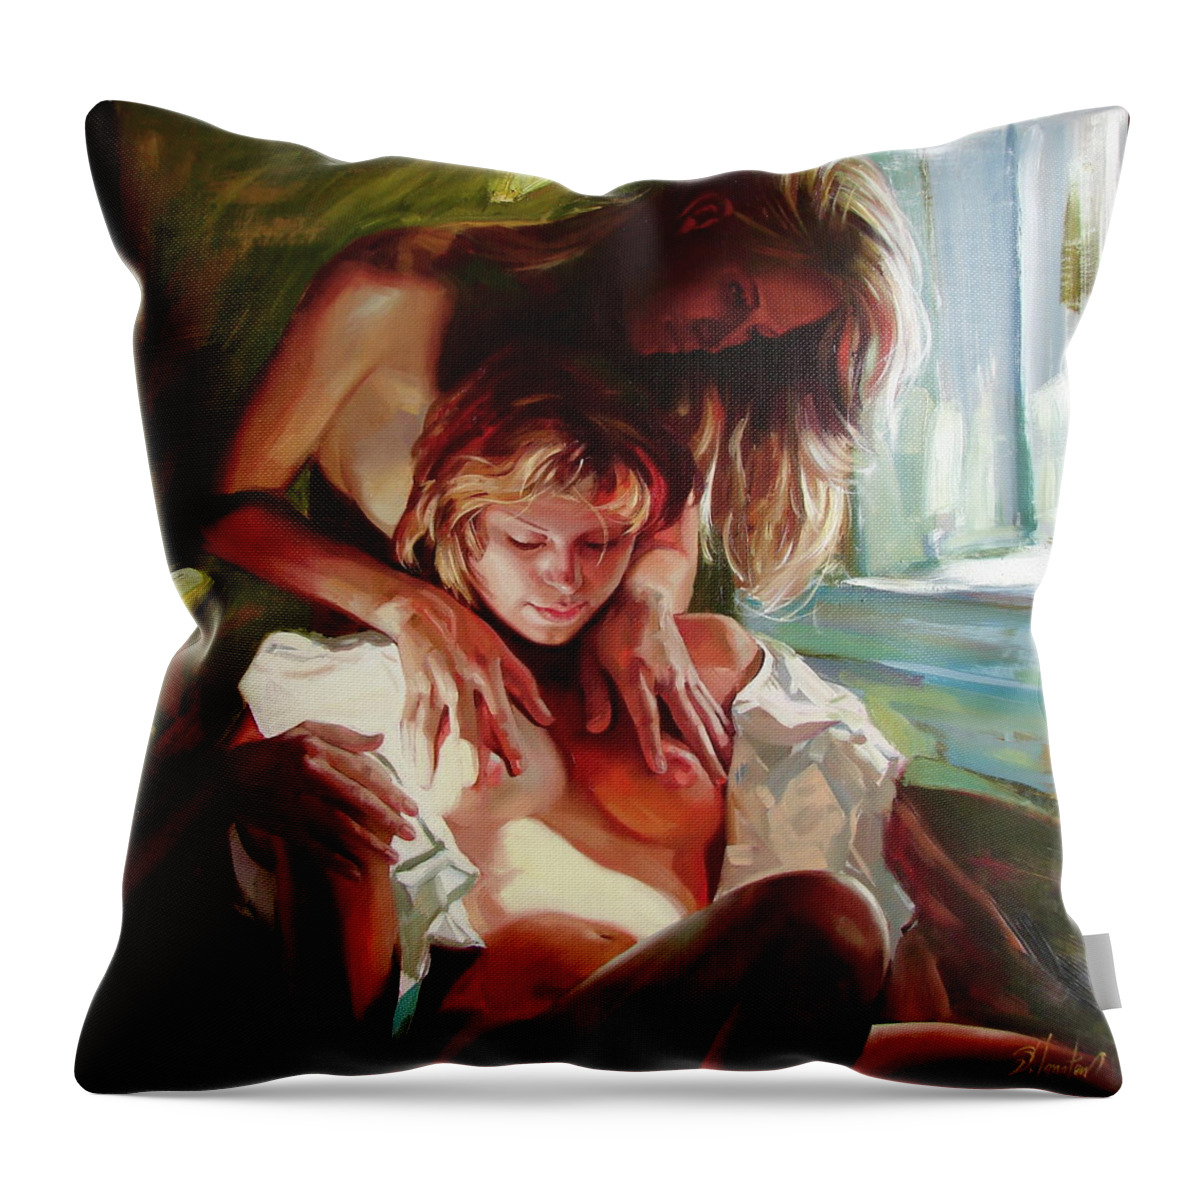 Ignatenko Throw Pillow featuring the painting Female secrets by Sergey Ignatenko